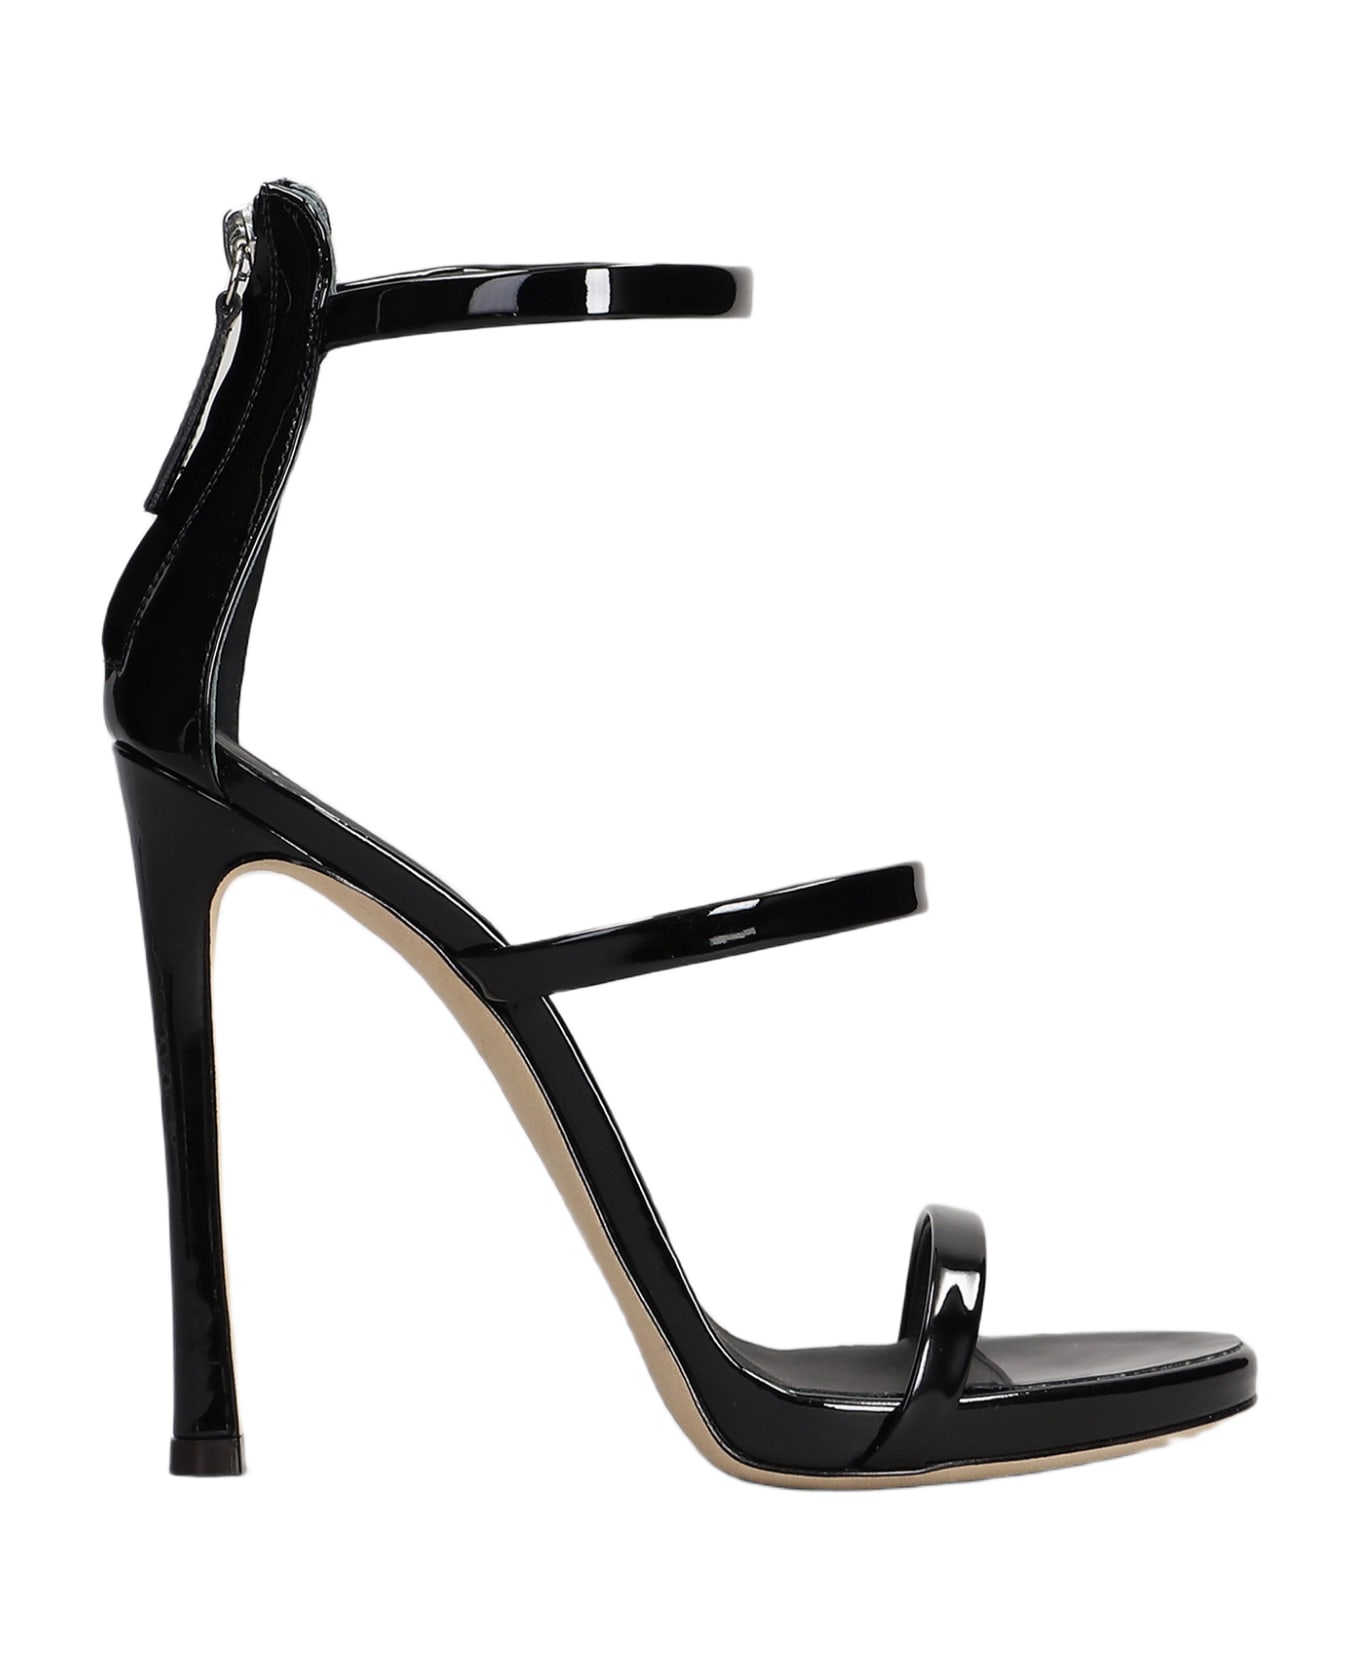 Giuseppe Zanotti Harmony Sandals In Black Patent Leather - black サンダル